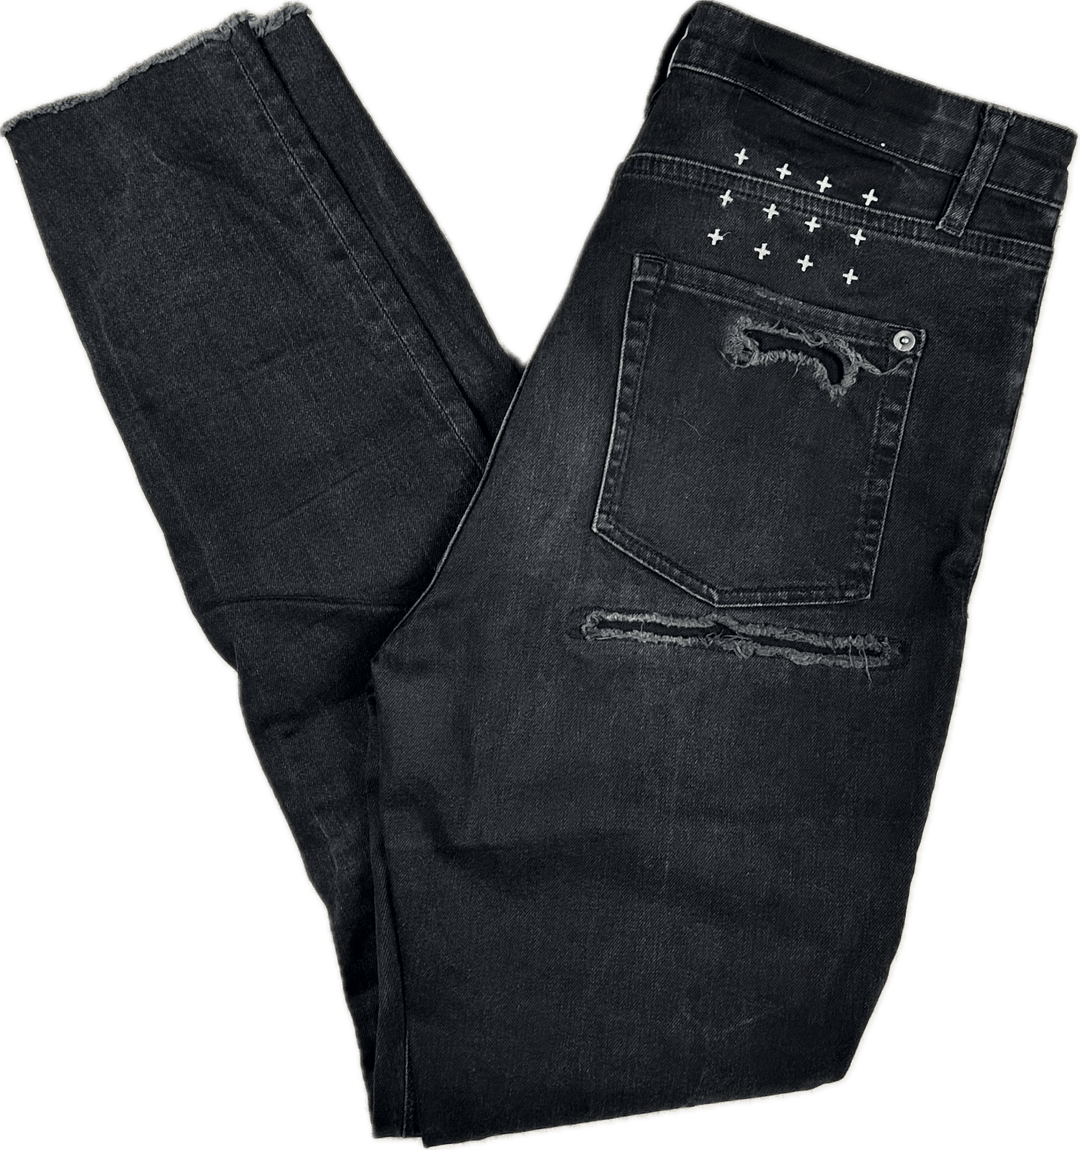 Ksubi High Rise Distressed Black Skinny Jeans - Size 28 - Jean Pool